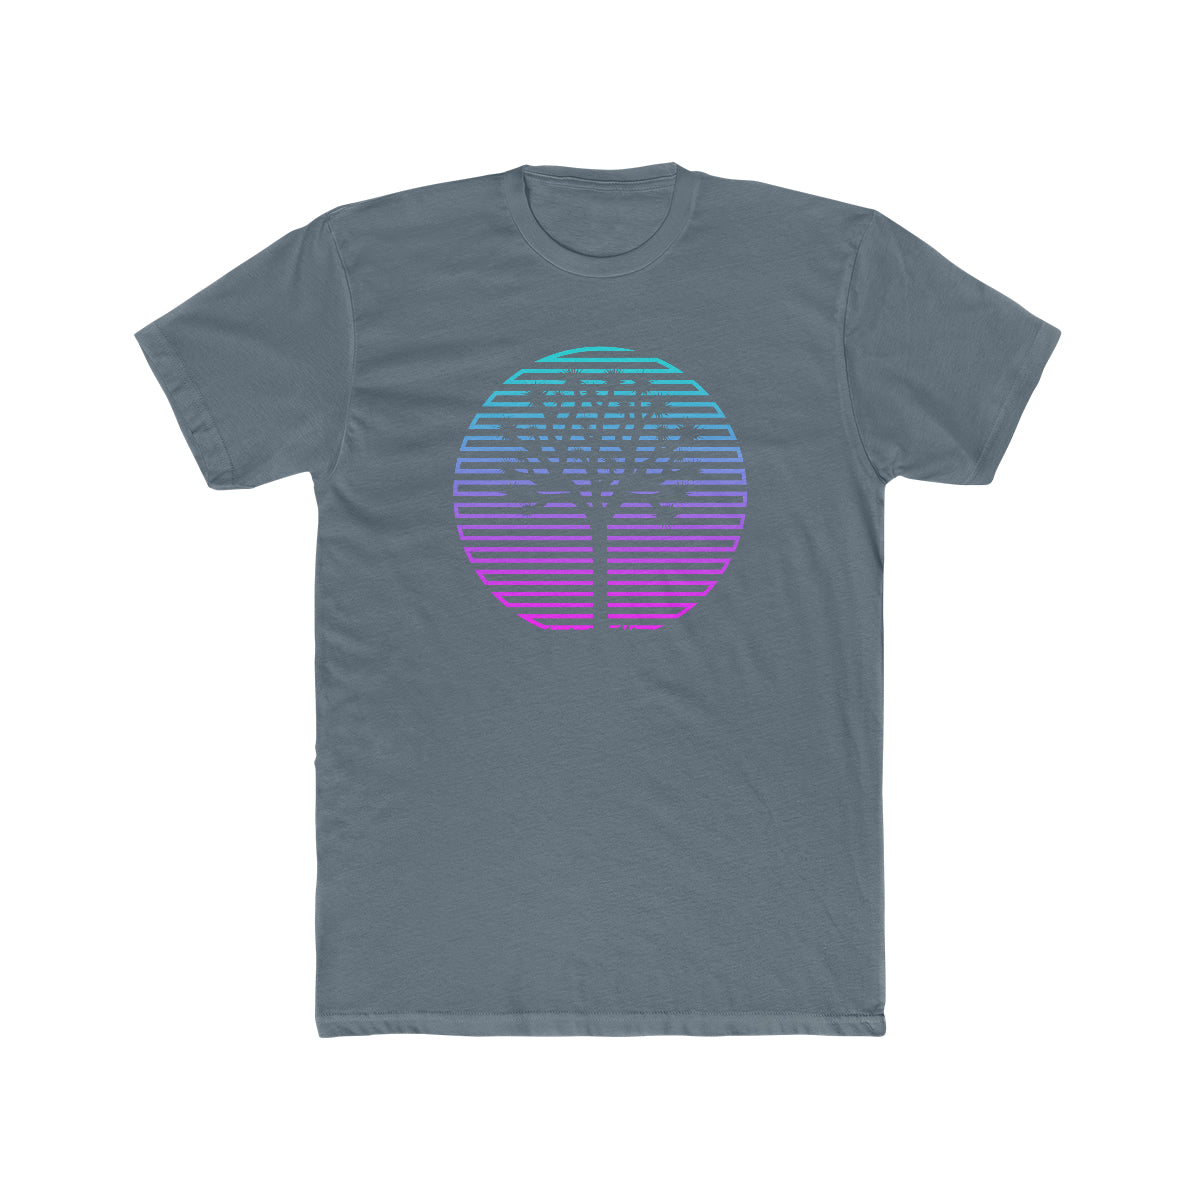 Joshua Tree National Park T-Shirt - Limited Edition Neon